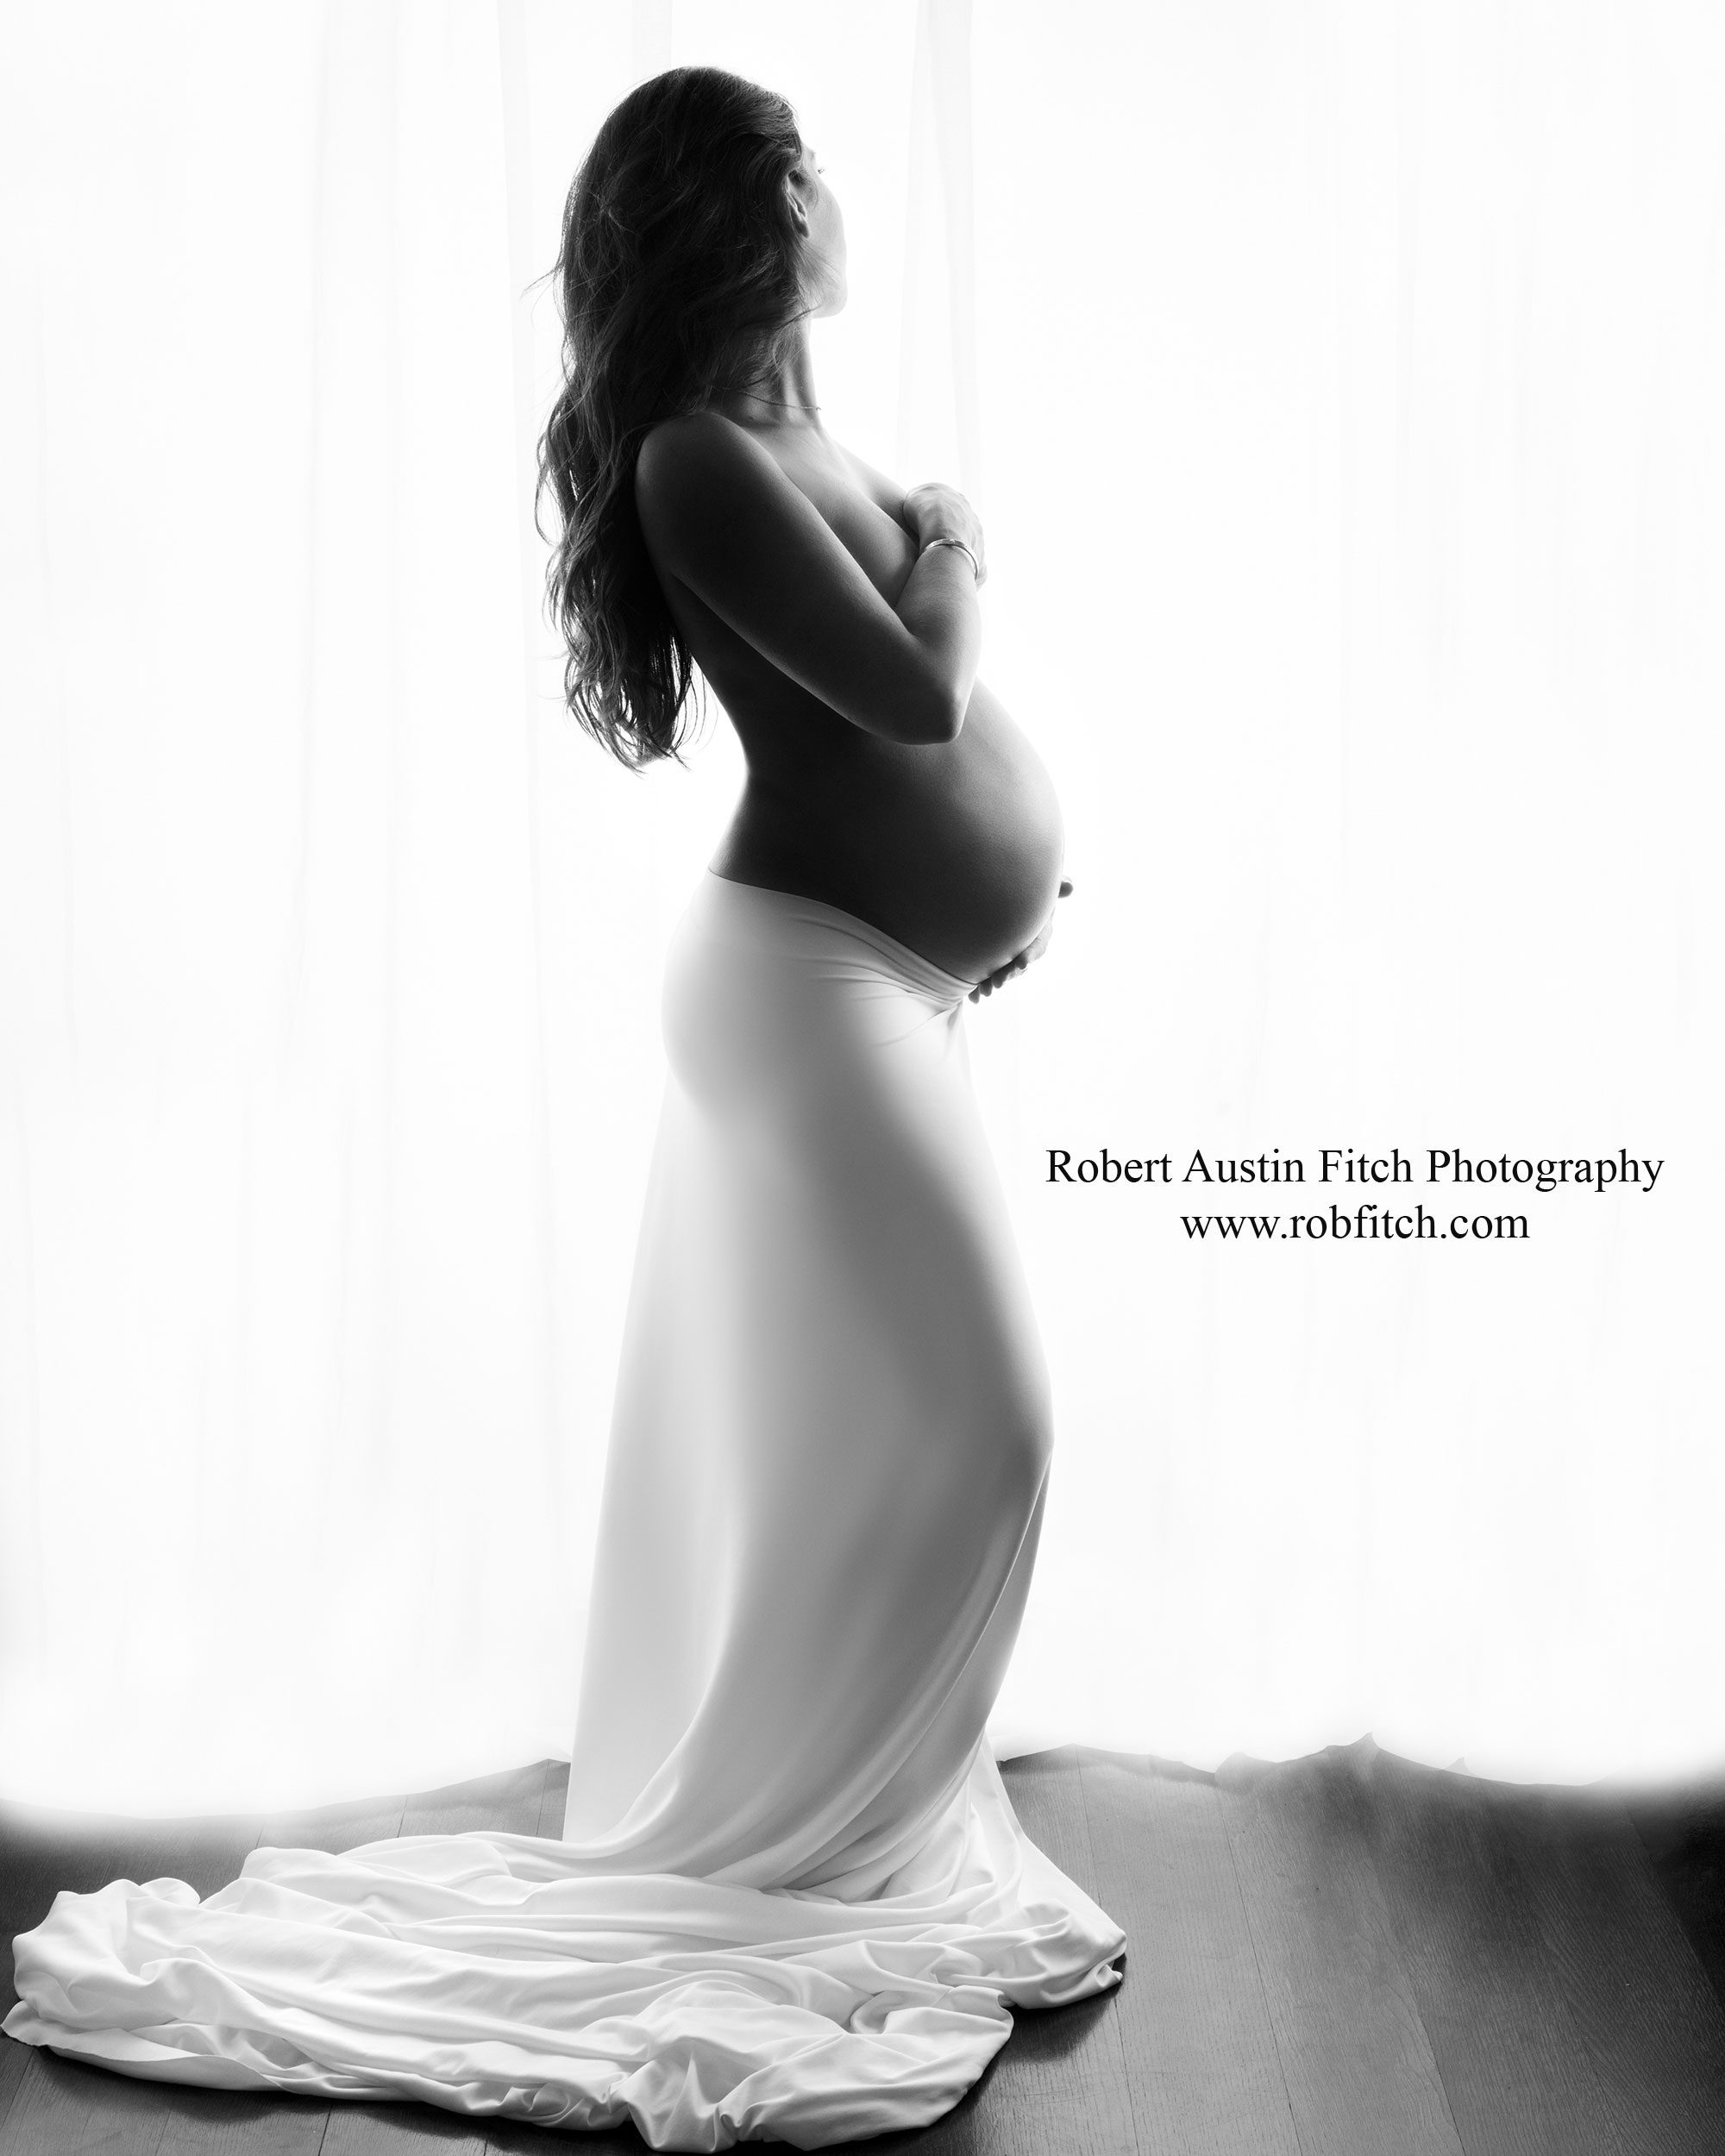 Artistic B&W Silhouette Maternity Photo